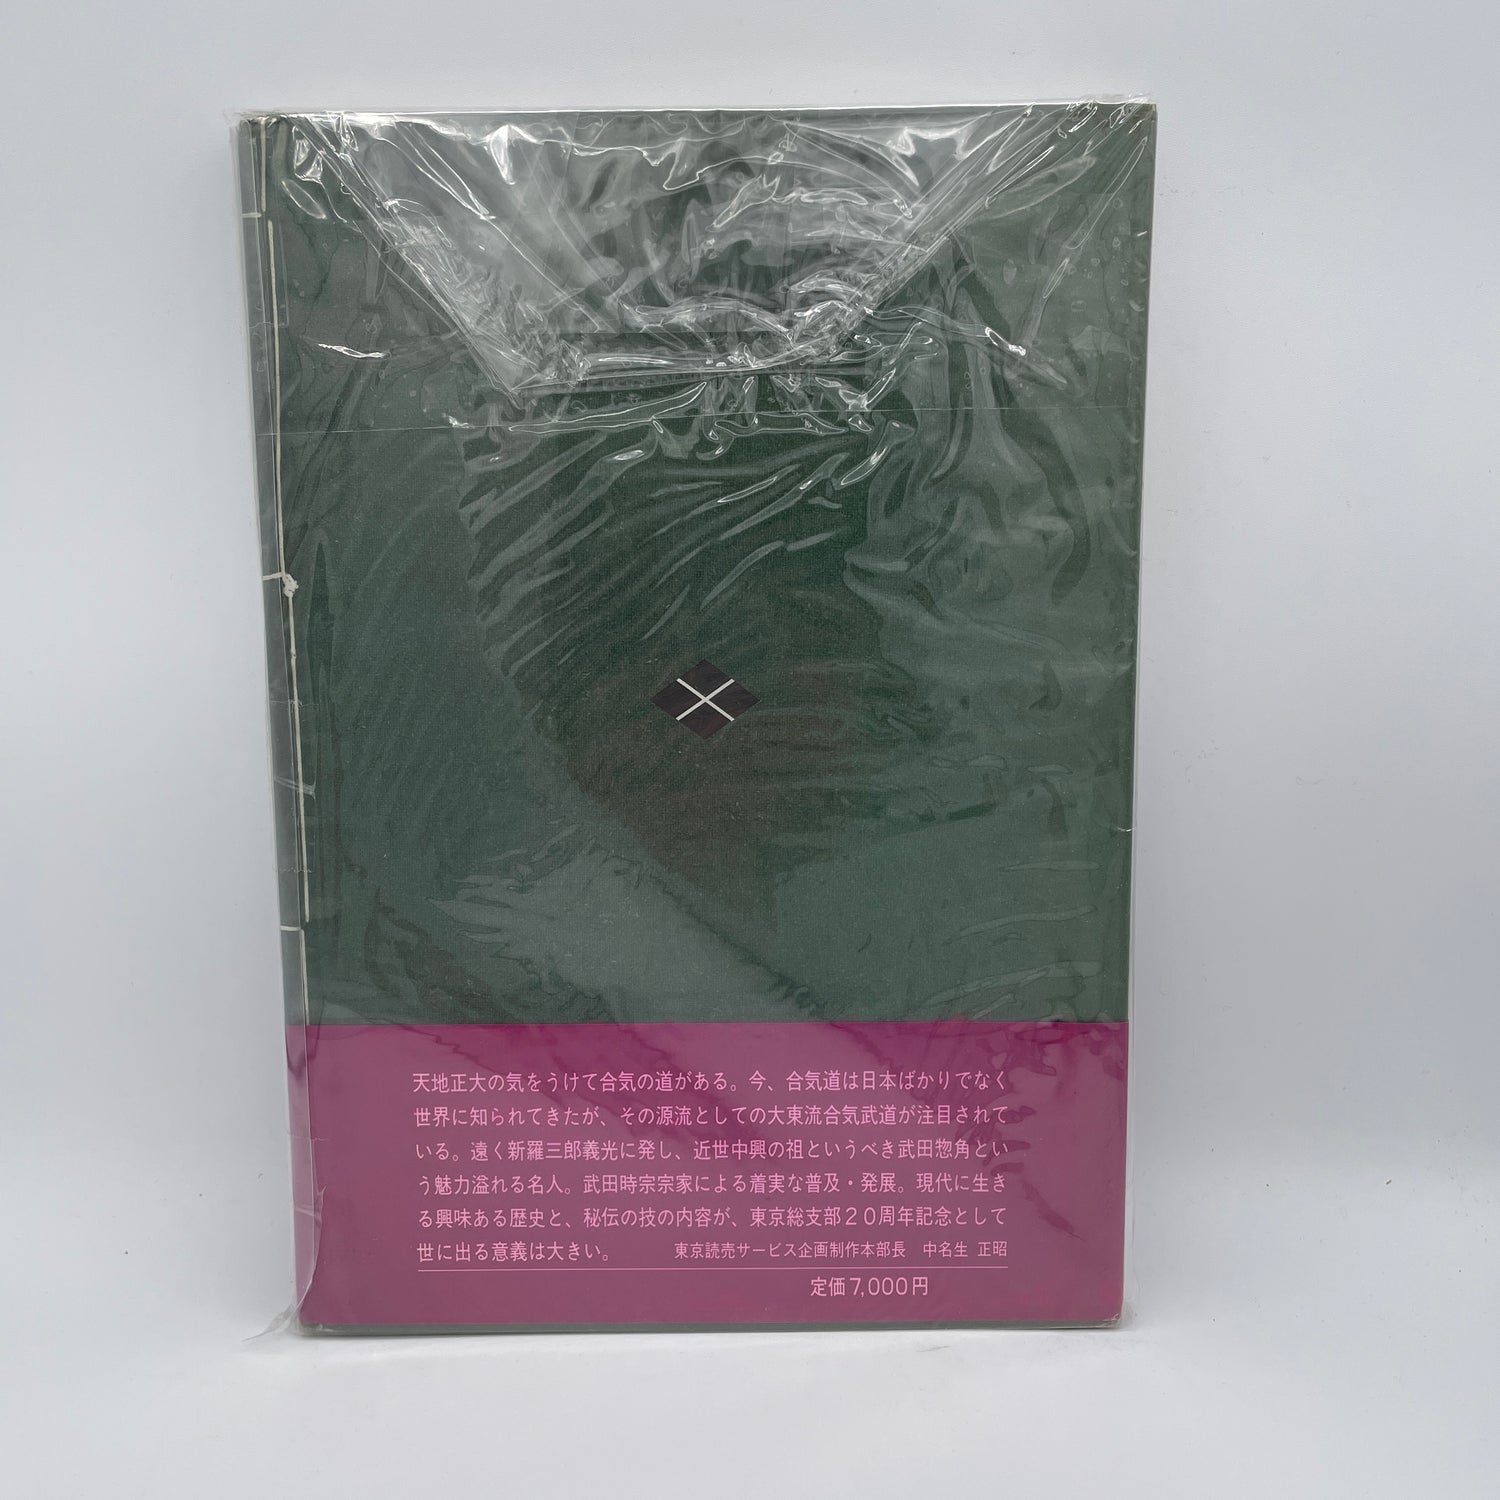 Daito Ryu Aikijujutsu Tokyo Branch 20th Anniversary Book (Preowned)